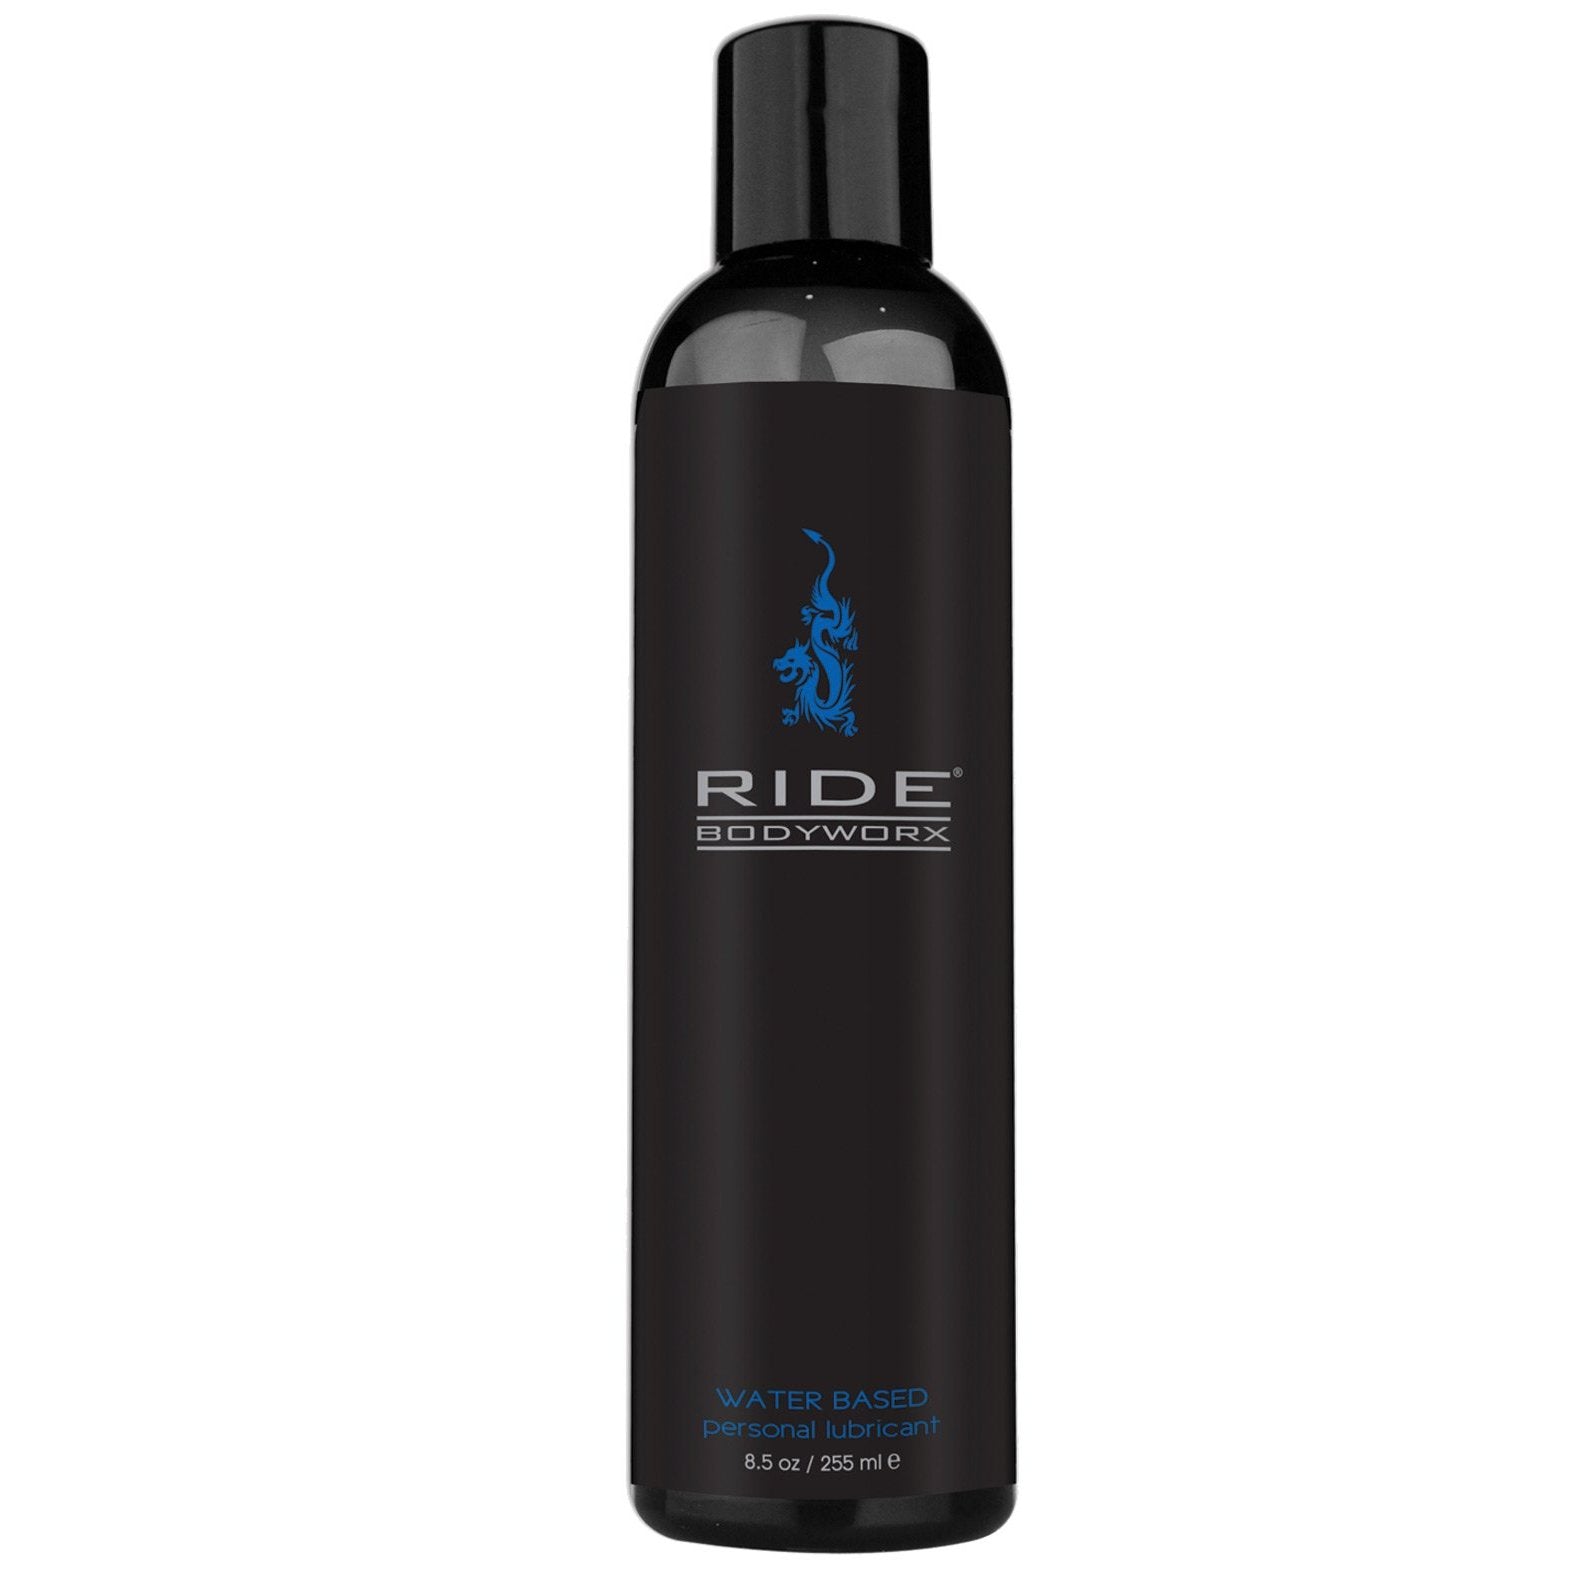 Ride BodyWorx Water Based Lubricant